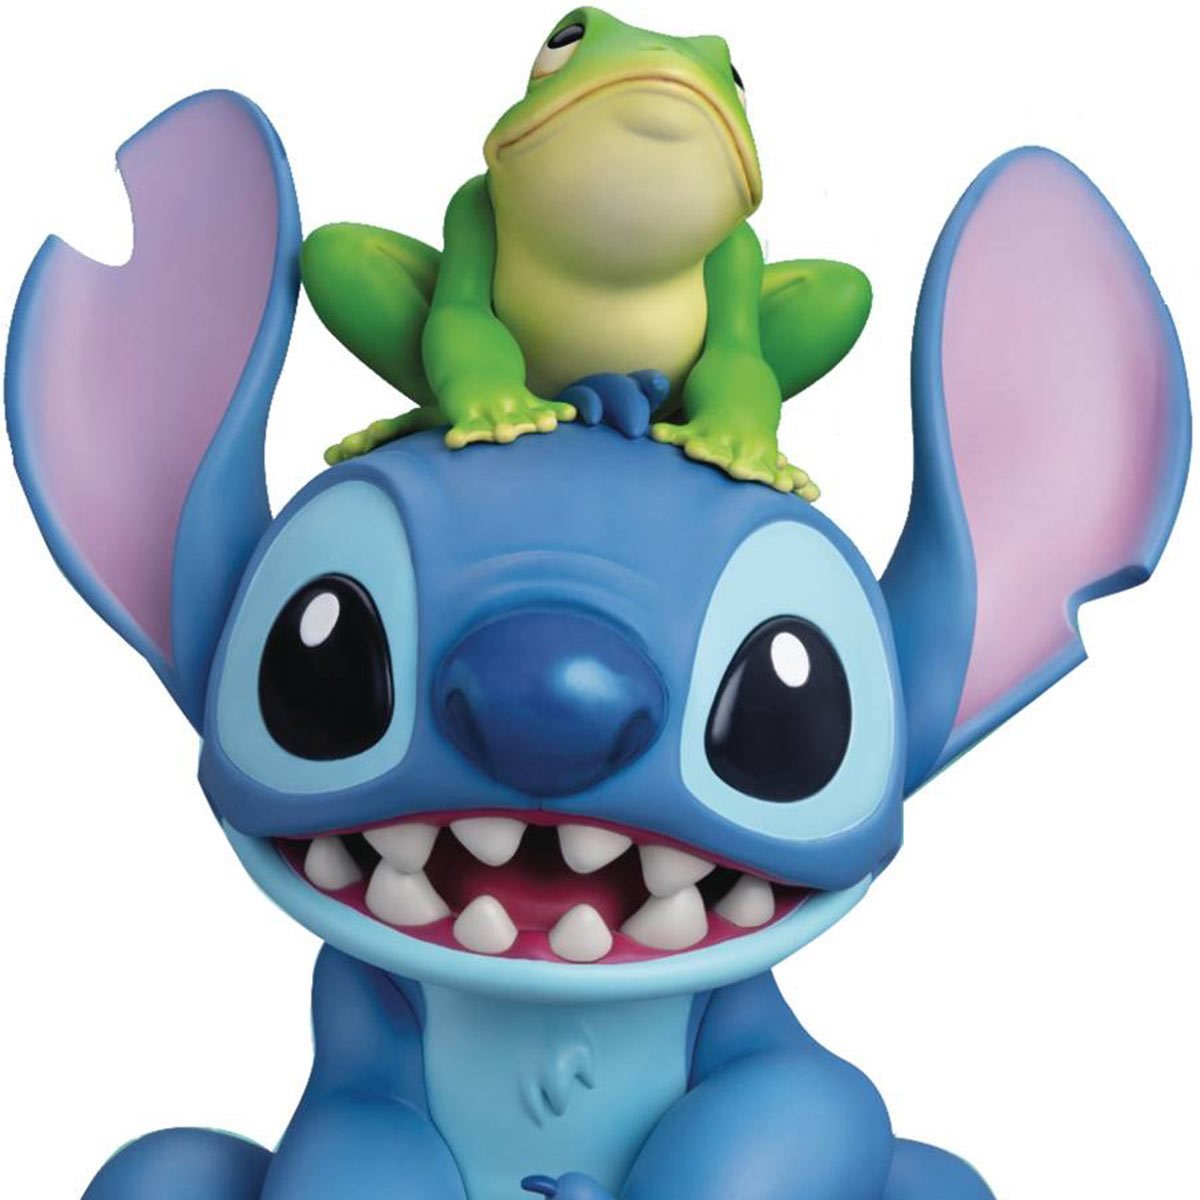 Disney 100 Years of Wonder Master Craft MC-063 Stitch with Frog